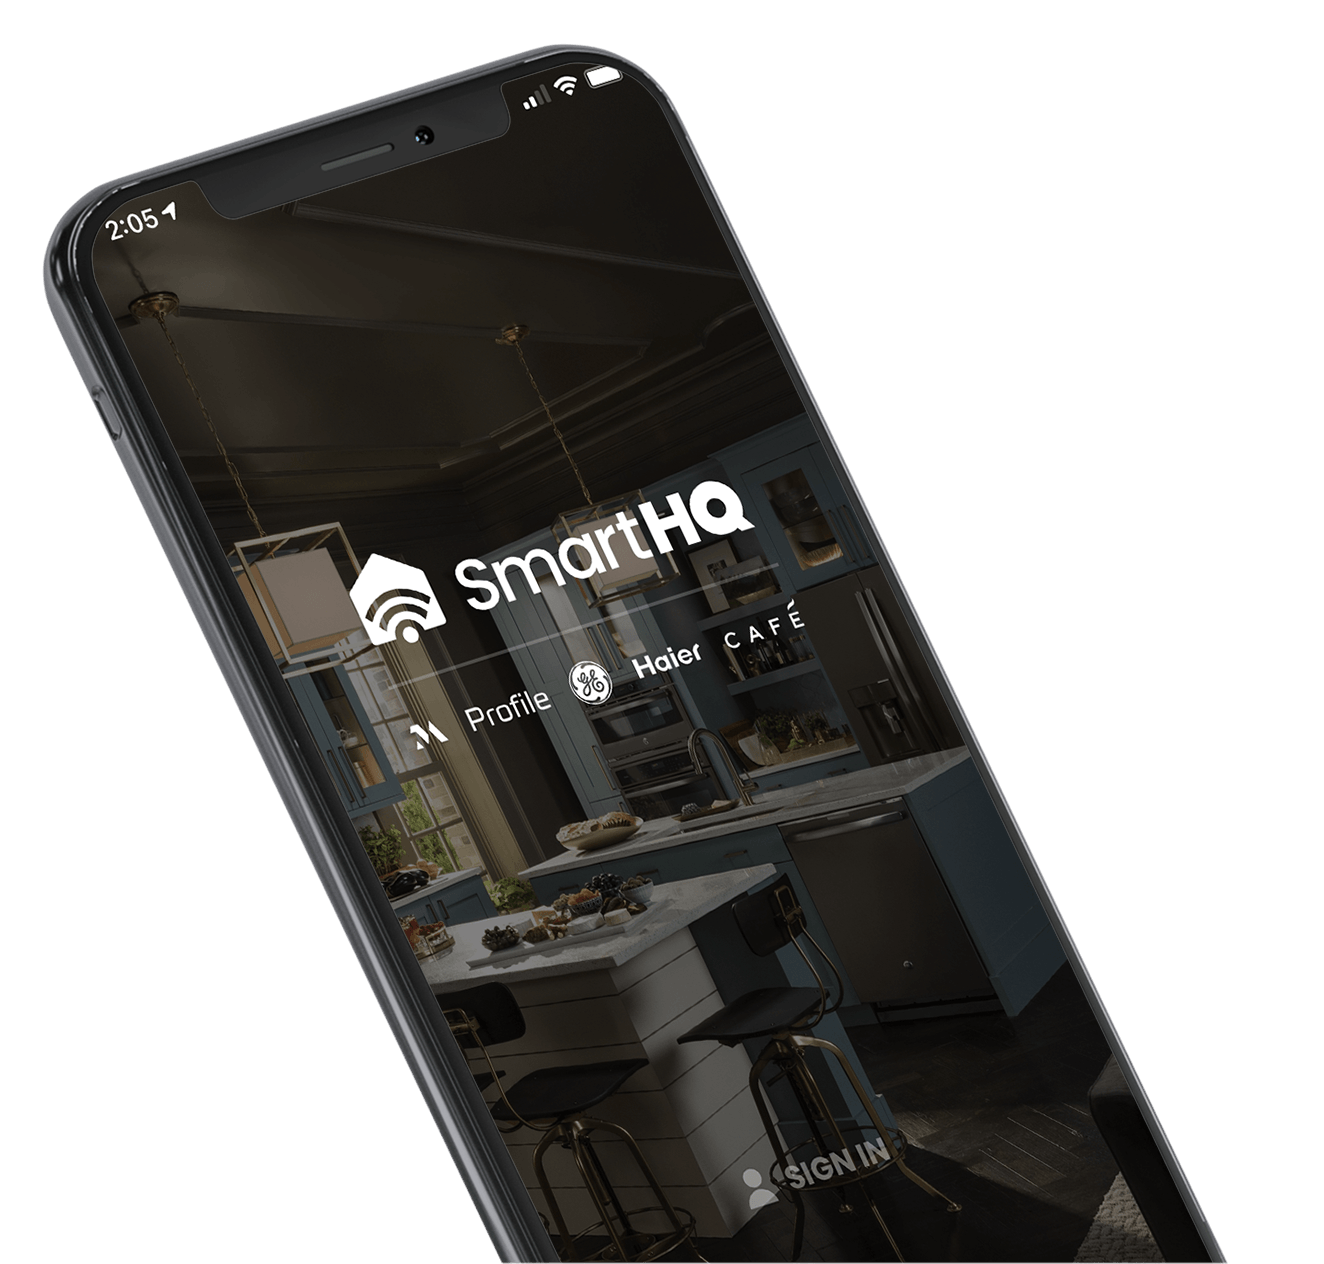 SmartHQ app screen on a smartphone.